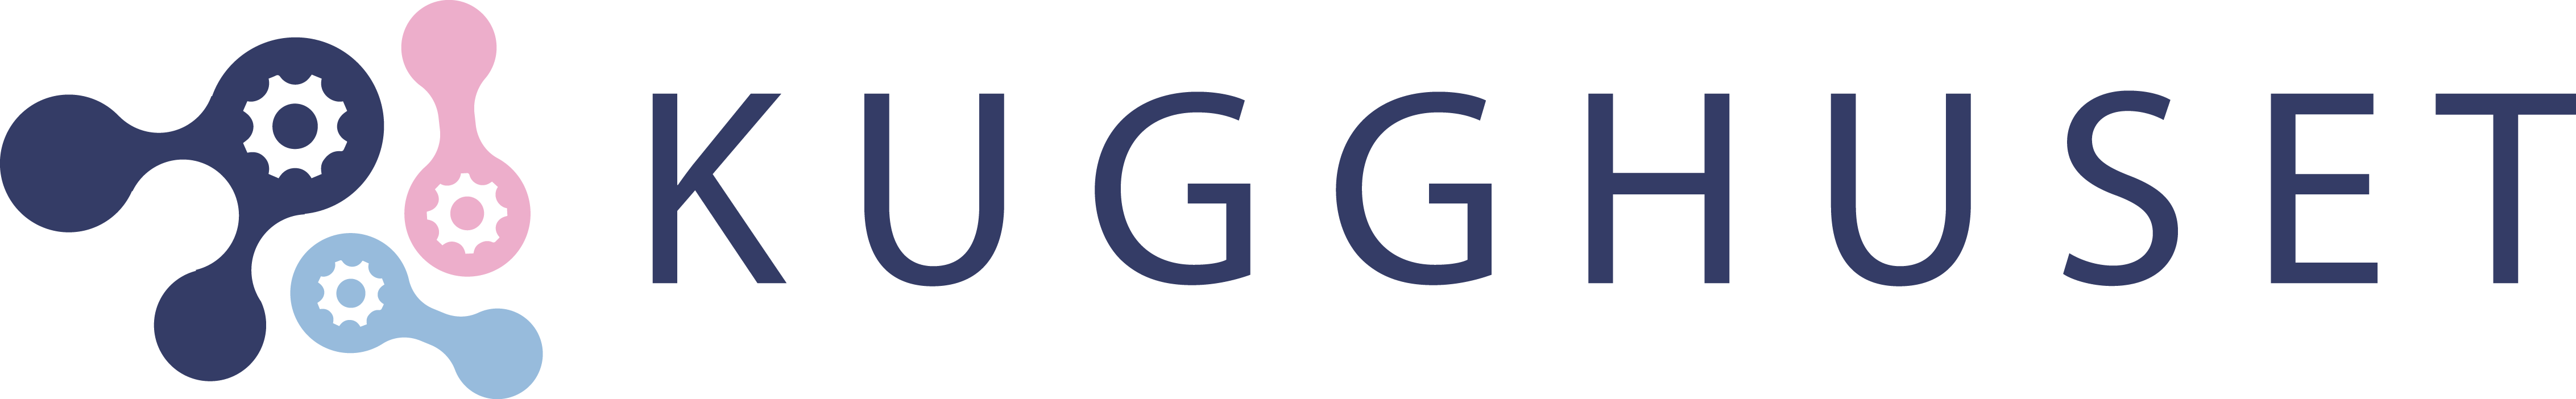 Kugghuset logo